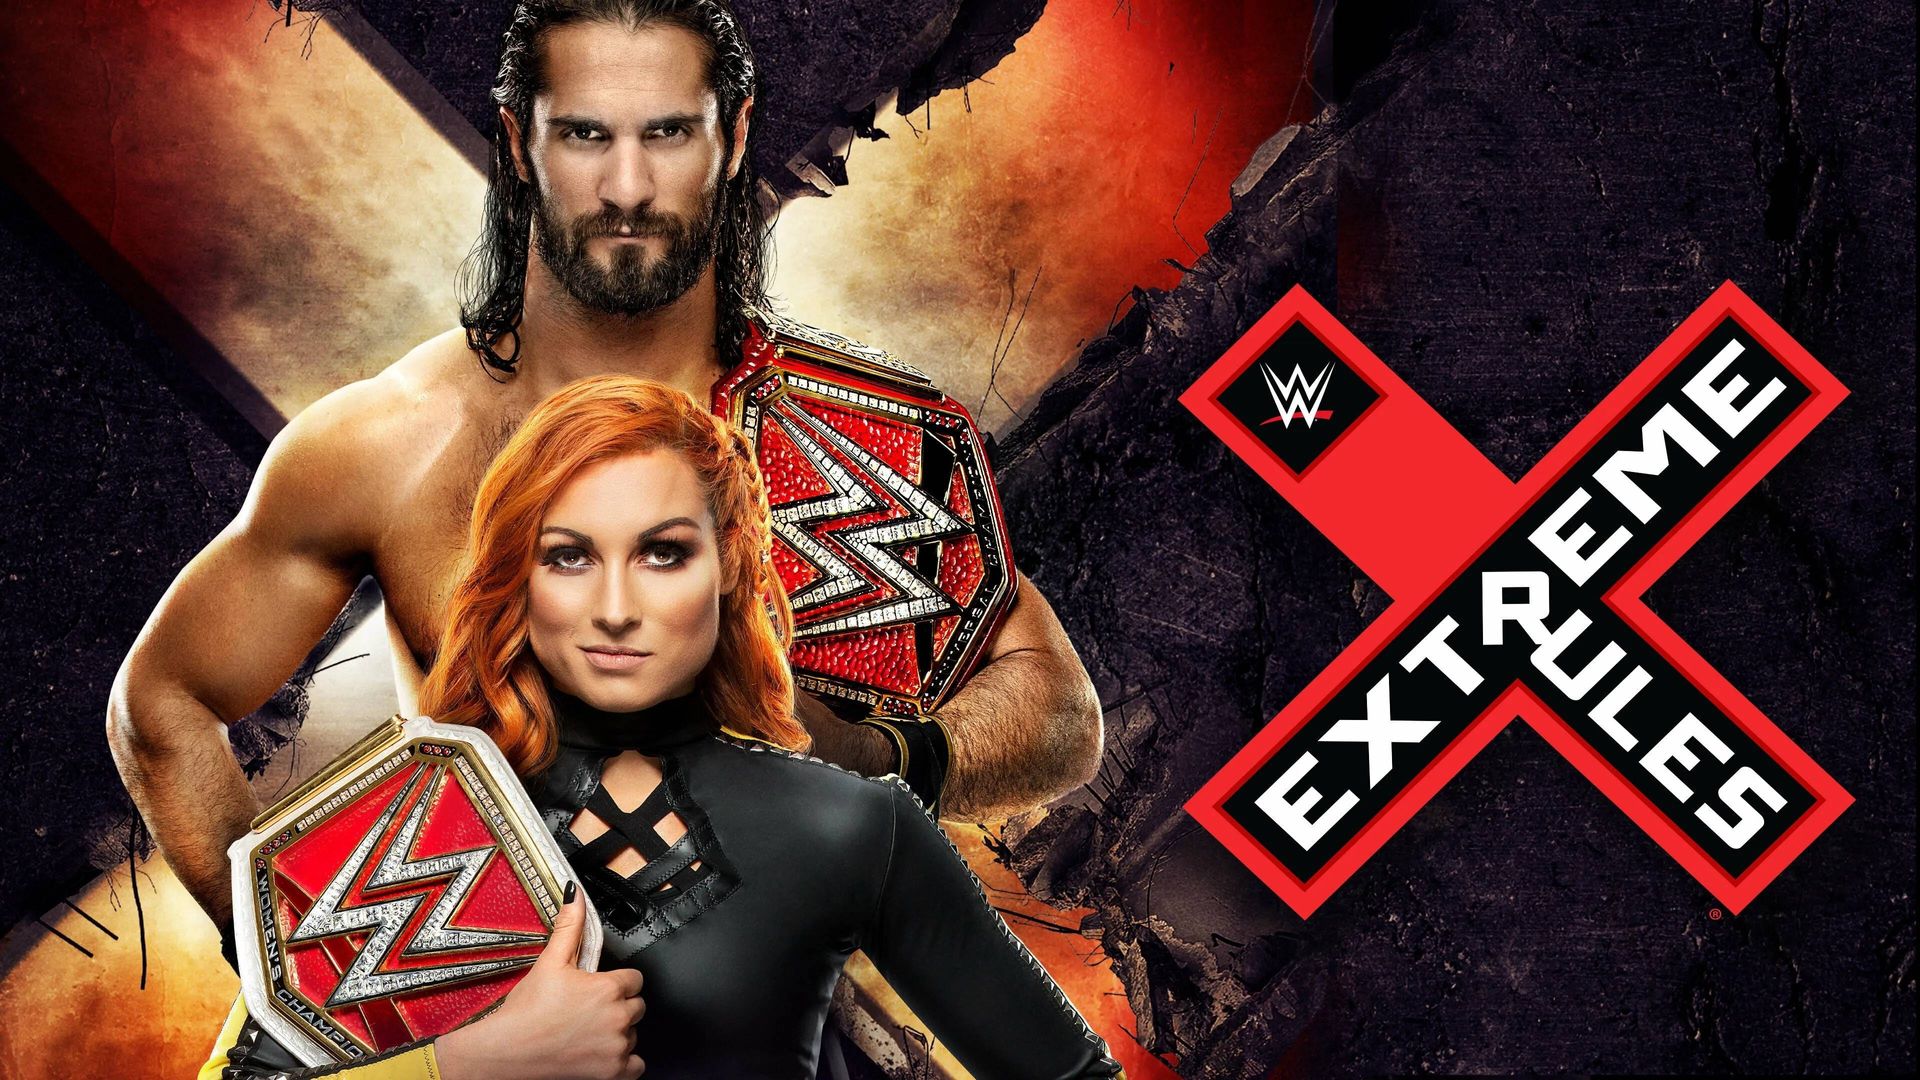 WWE: Extreme Rules background